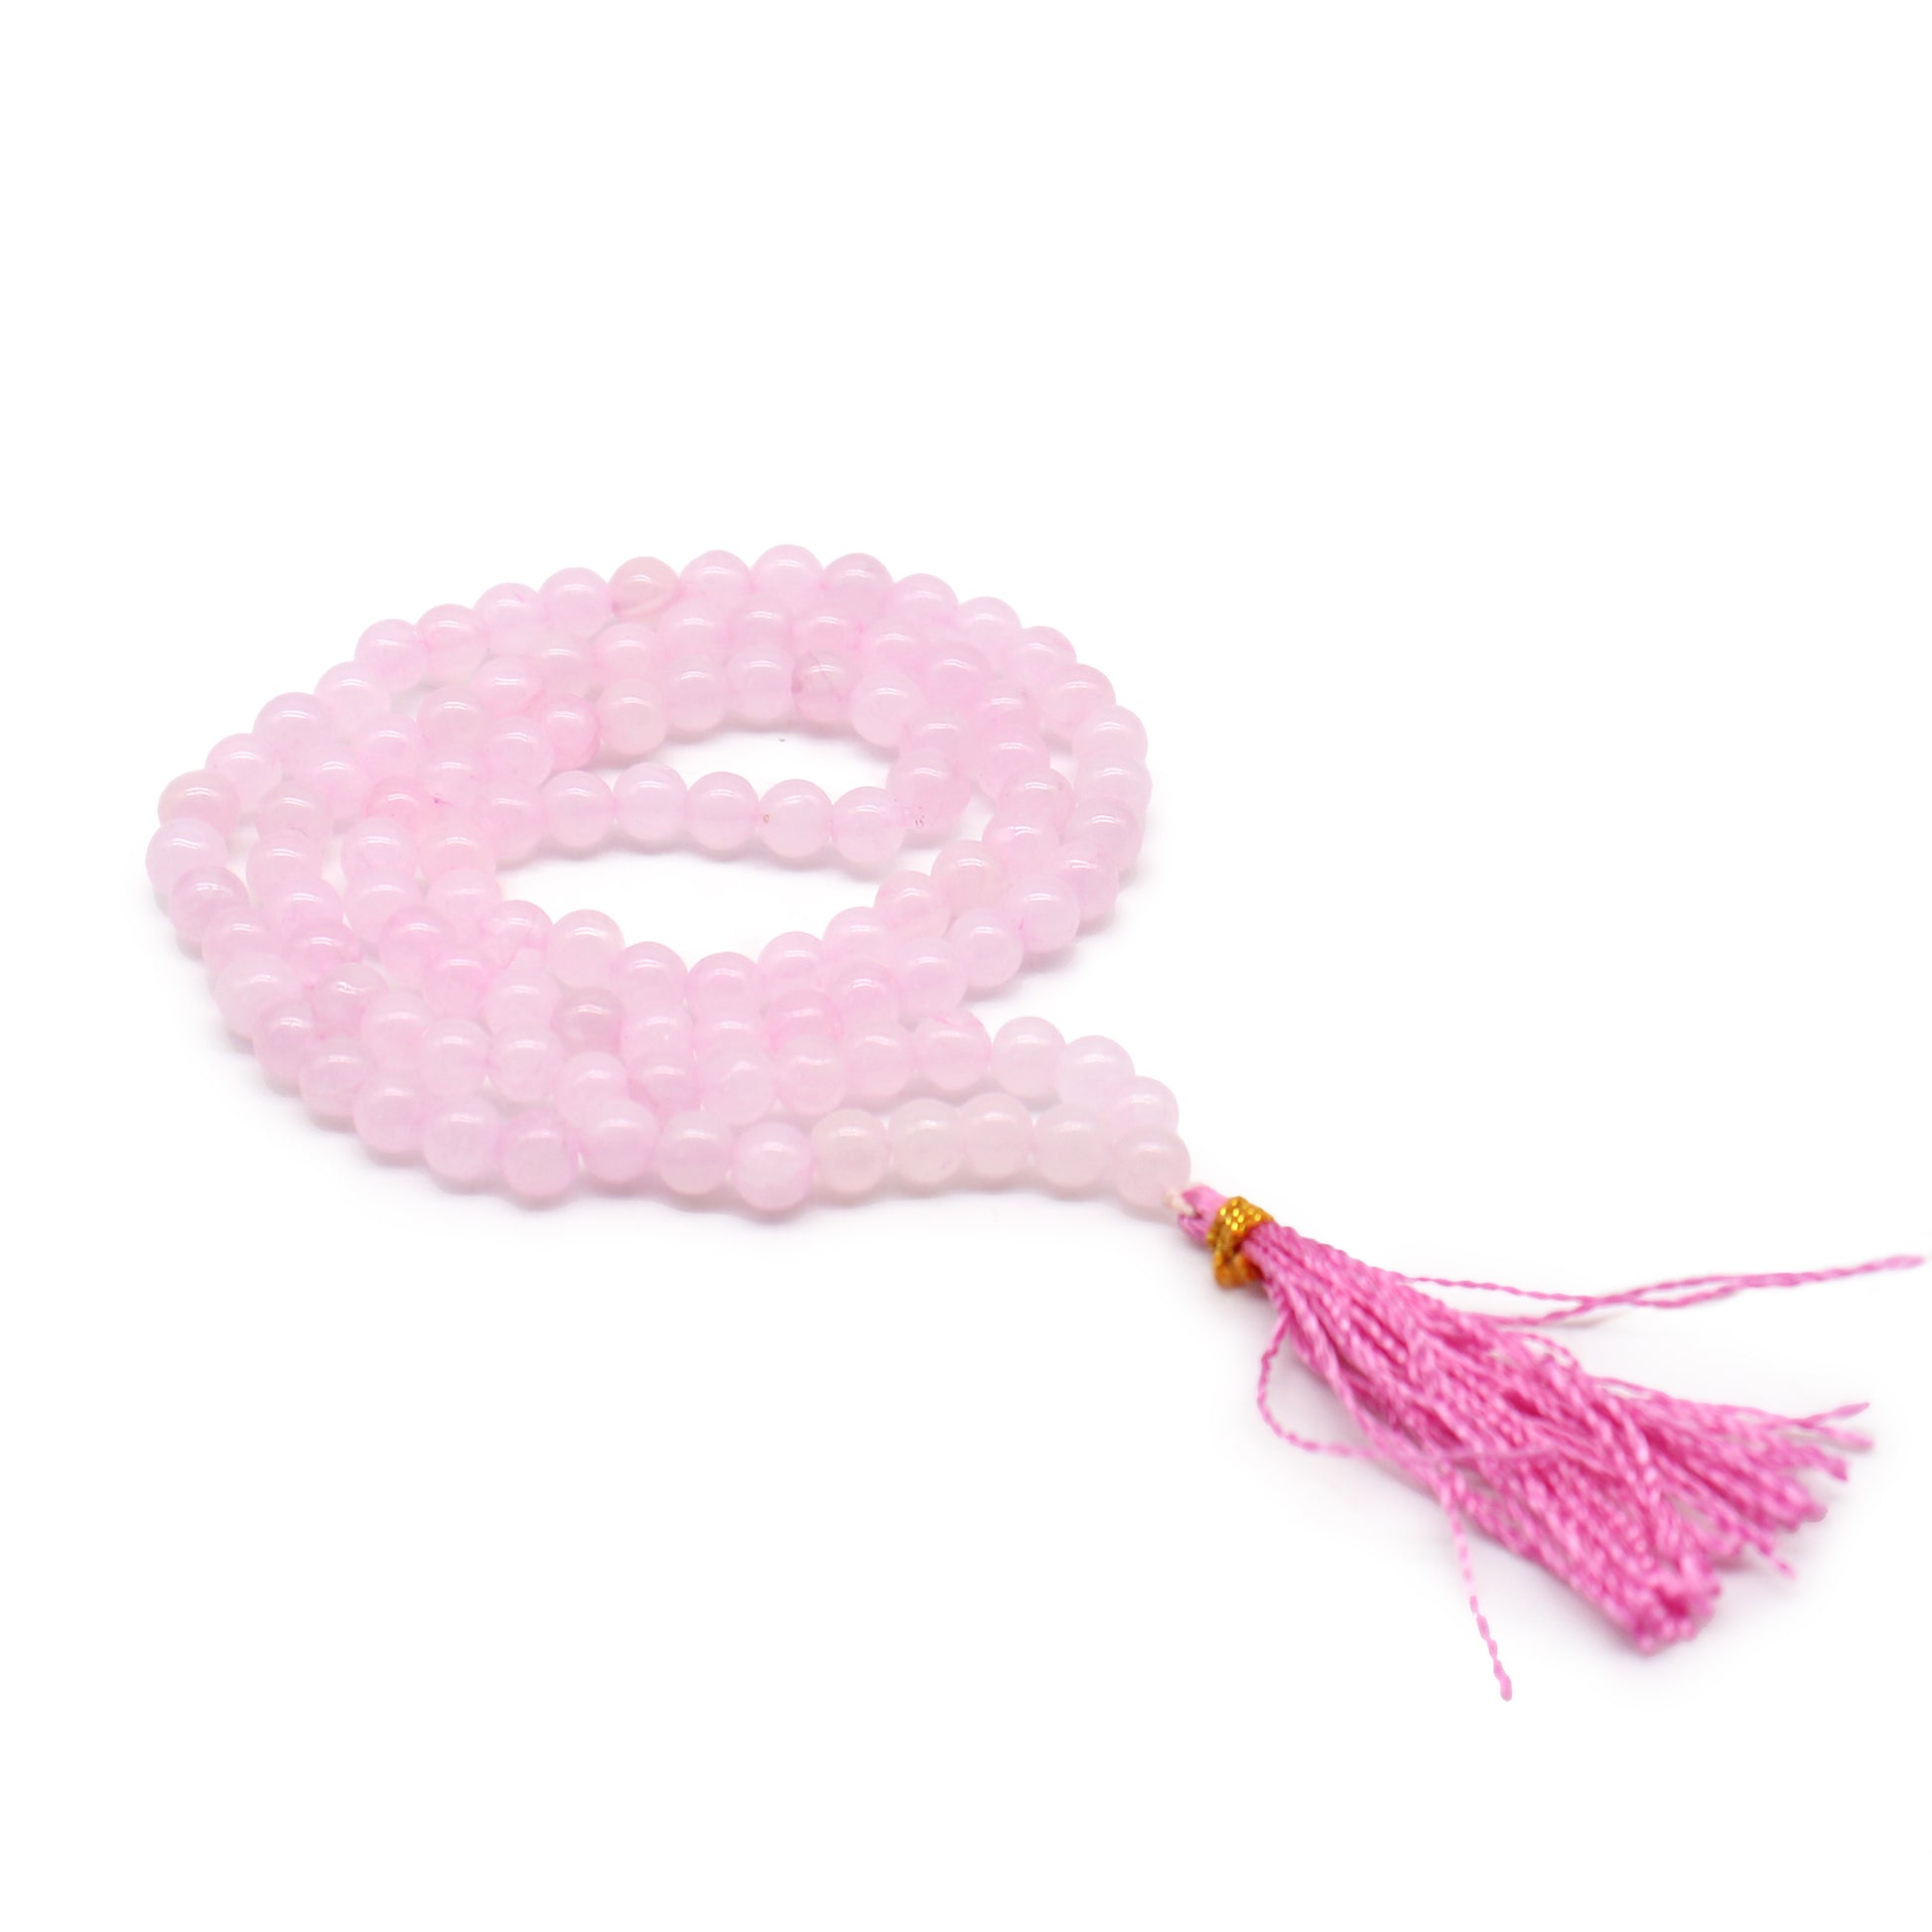 108 Bead Gemstone Mala Beads - Rose Quartz - Cosmic Serenity Shop